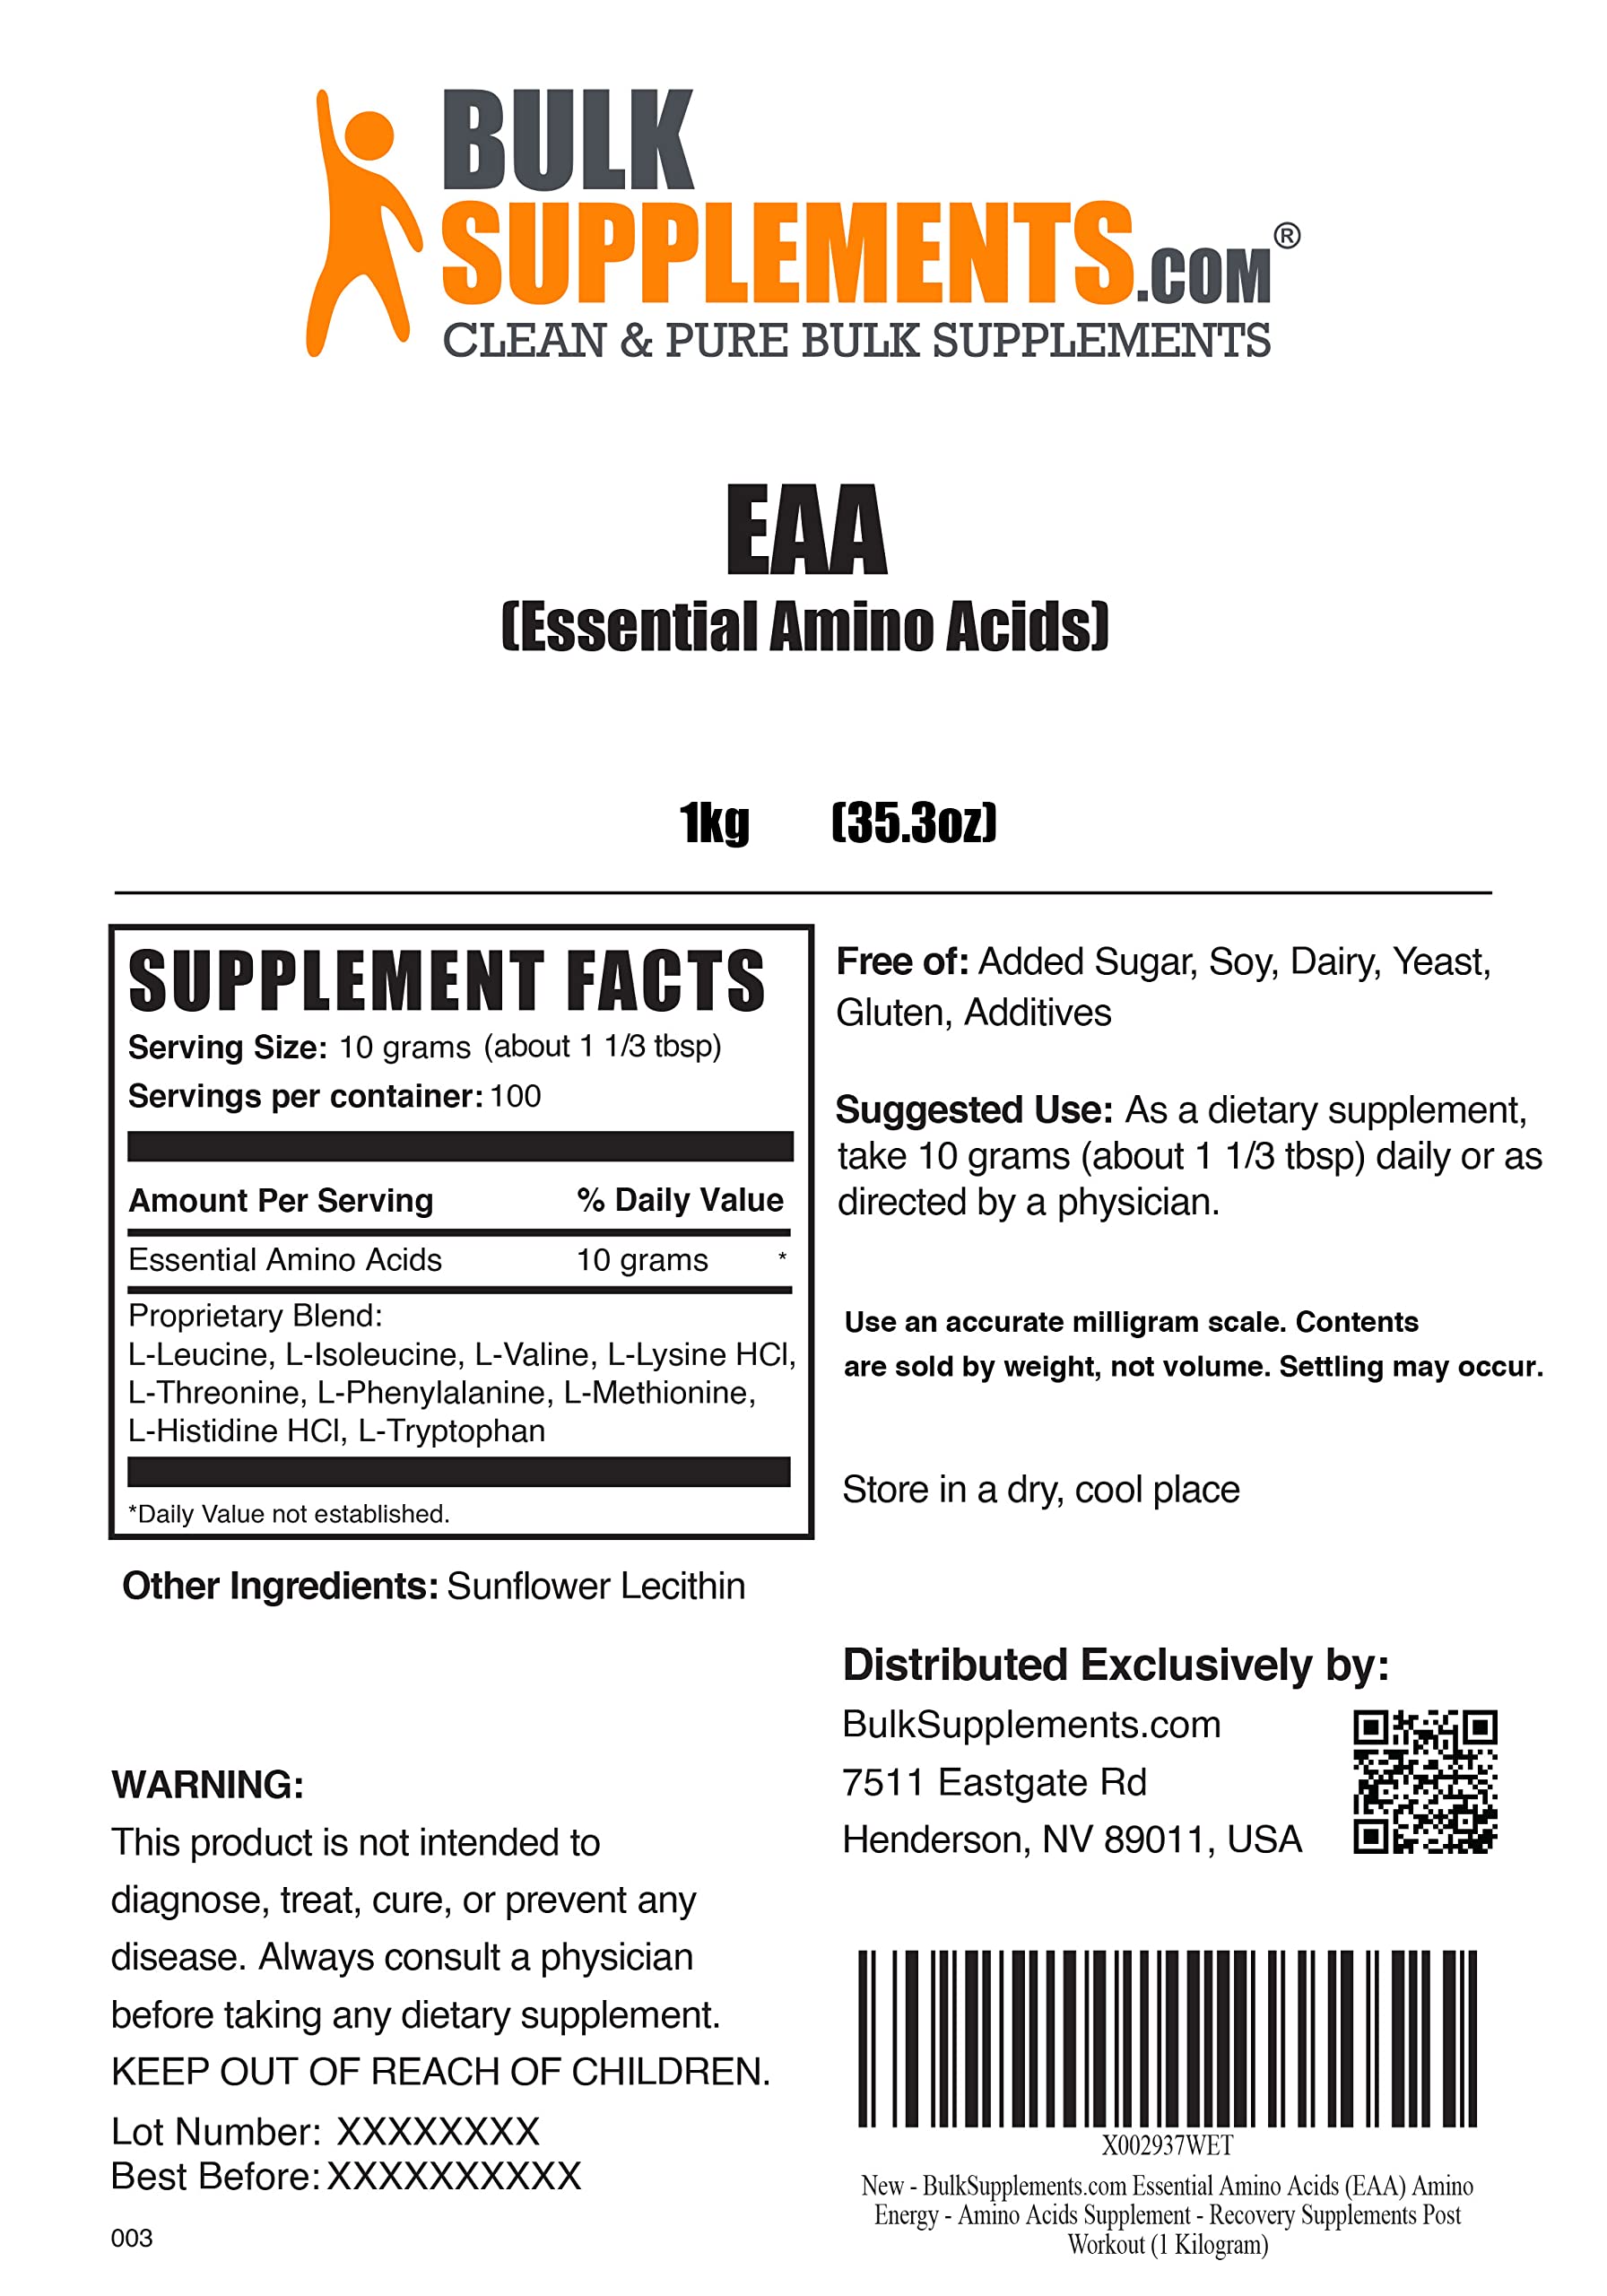 BULKSUPPLEMENTS.COM Essential Amino Acids Powder (EAA Powder) 1KG, with Creatine Monohydrate Powder (Micronized Creatine) 1KG, L-Glutamine Powder 1KG & Beta Alanine Powder 1KG Bundle